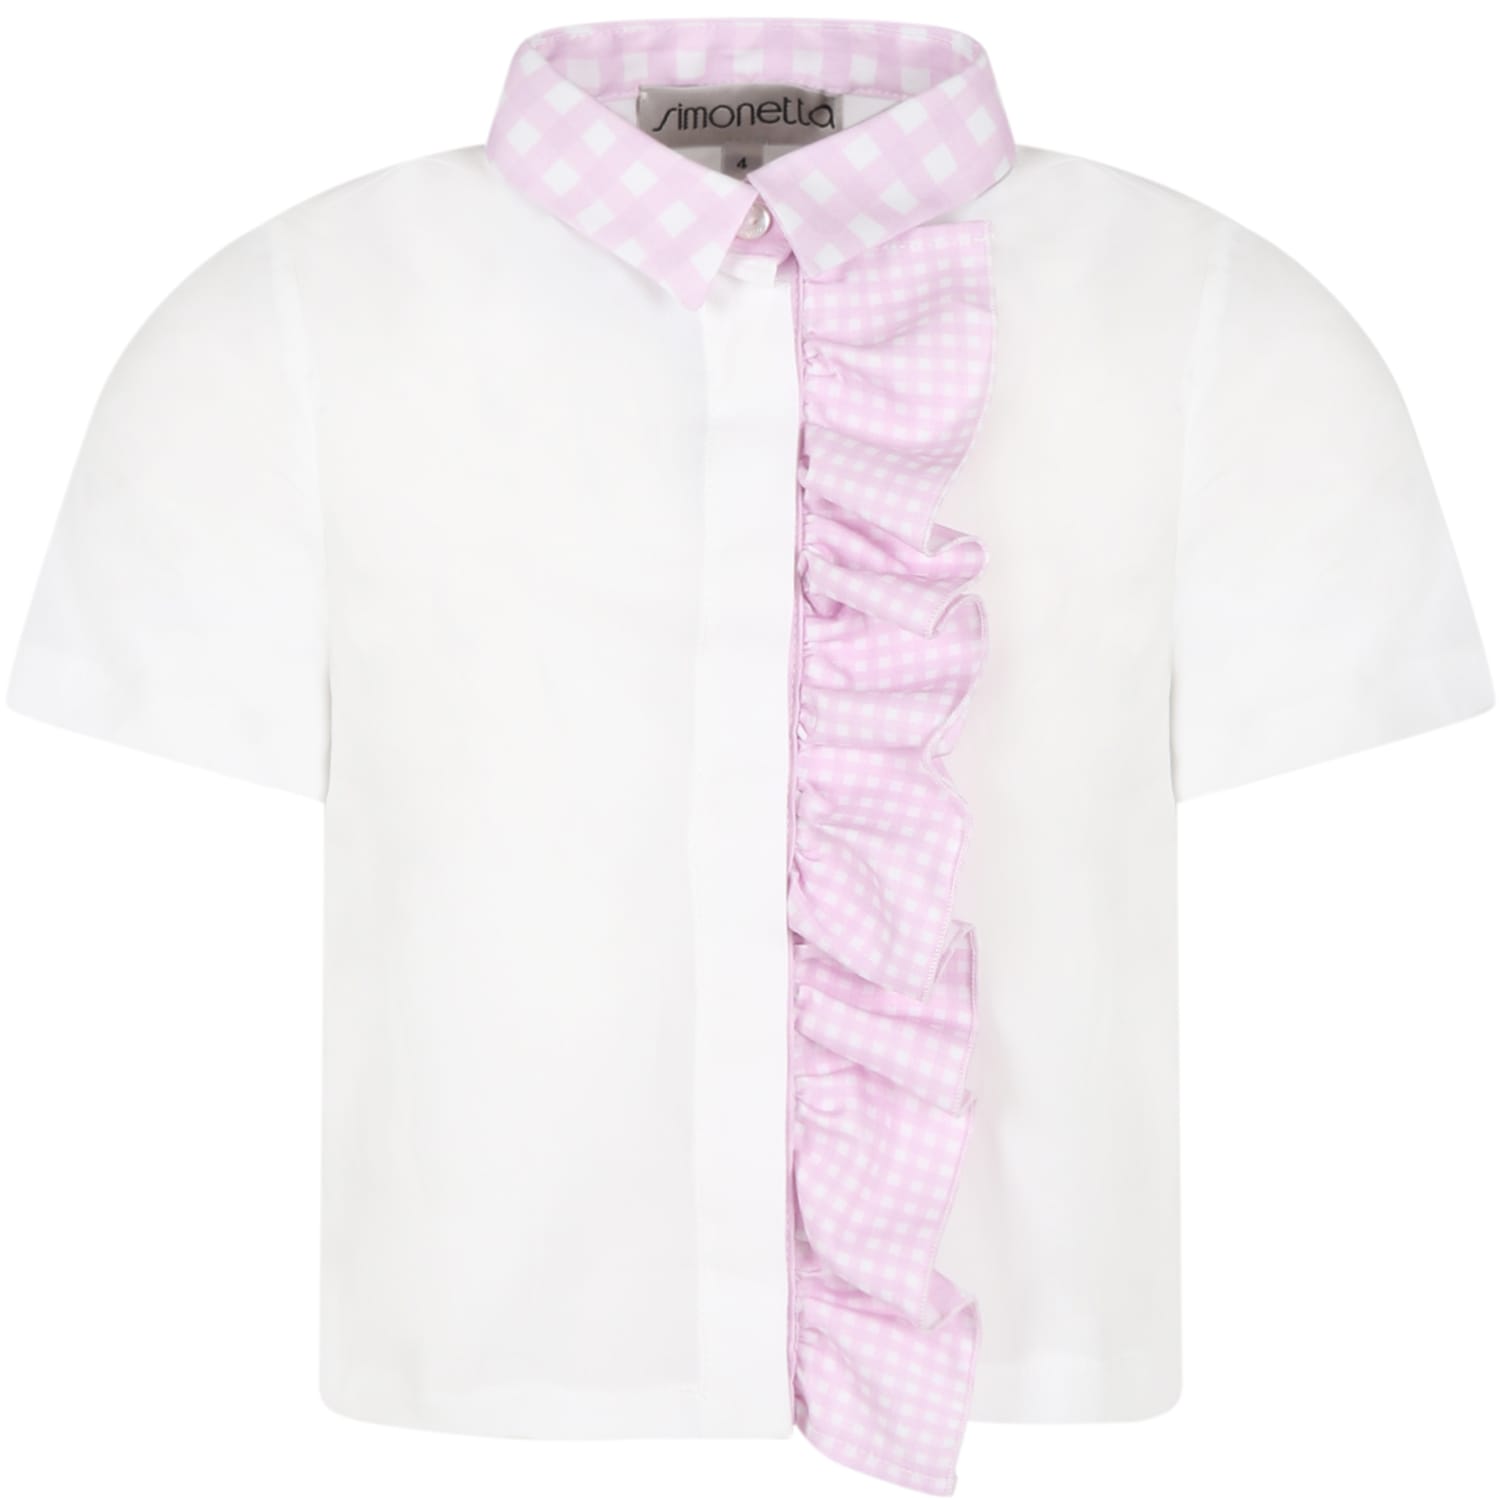 Simonetta White Shirt For Girl With Pink Ruffles